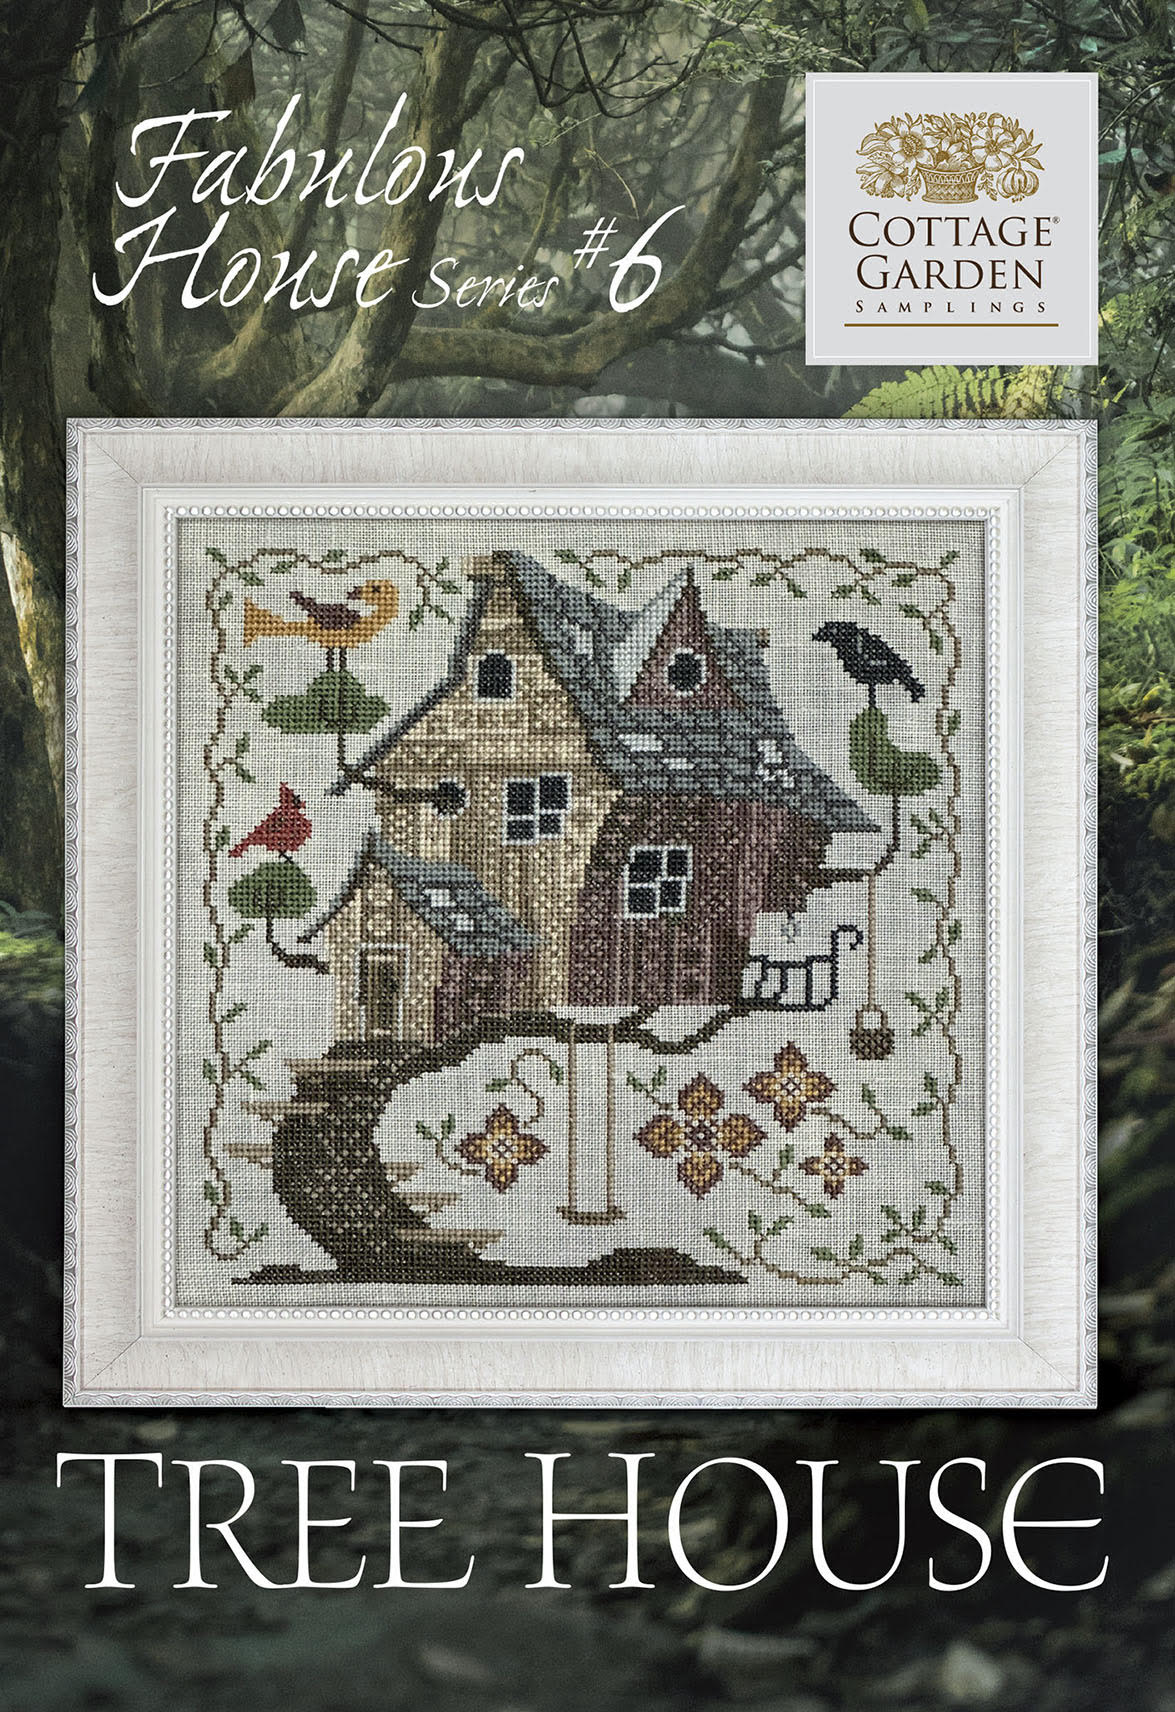 Tree House - Fabulous House Series #6 | Cottage Garden Samplings